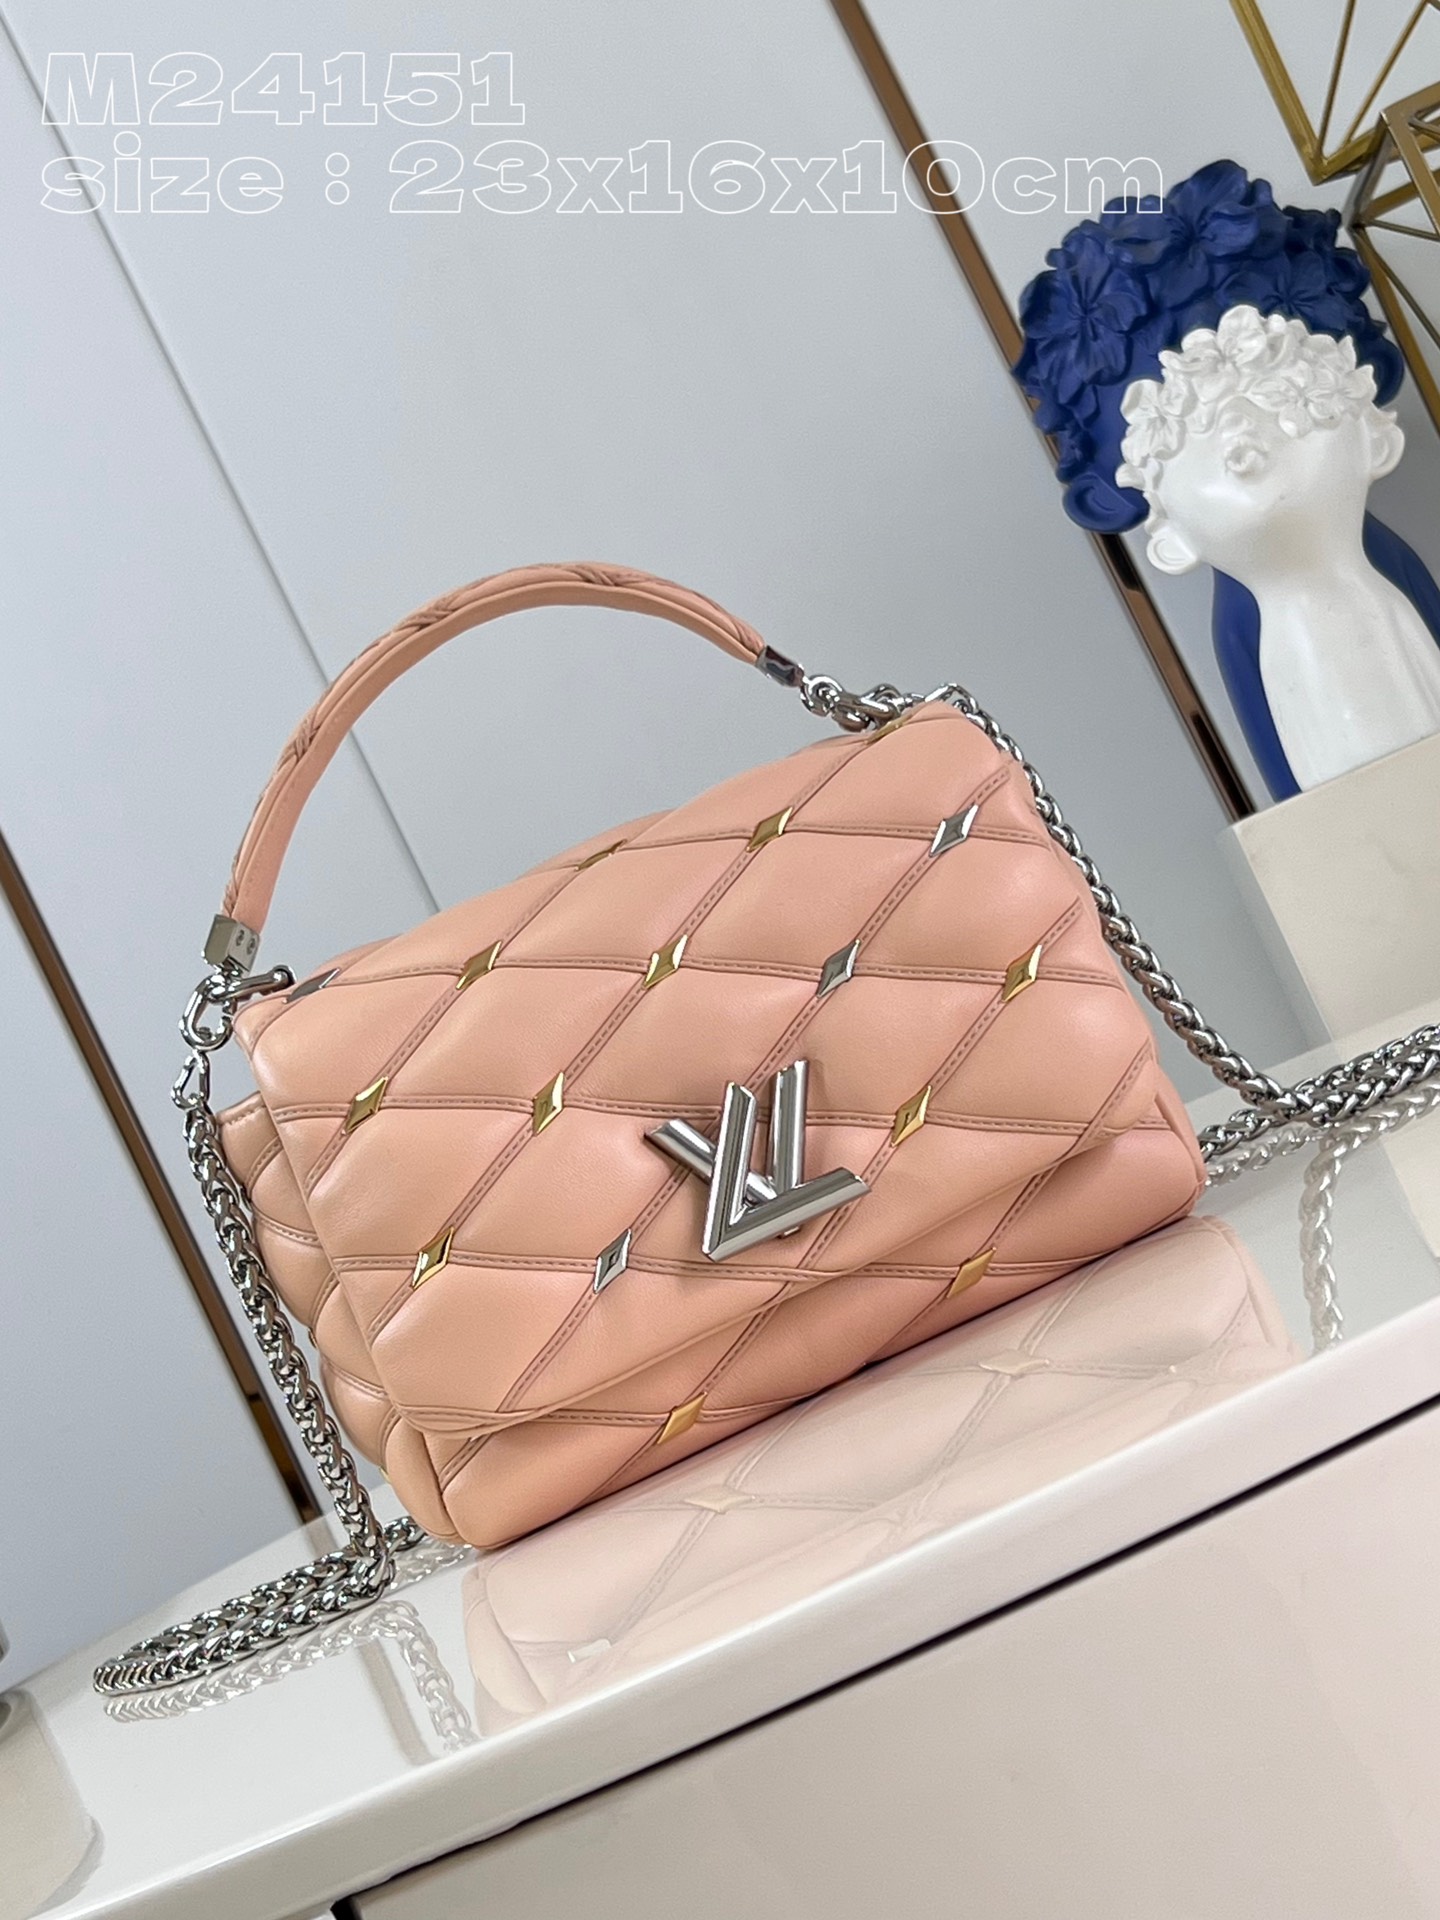 1:1 Replica
 Louis Vuitton Bags Handbags Pink Sheepskin LV Twist M24151